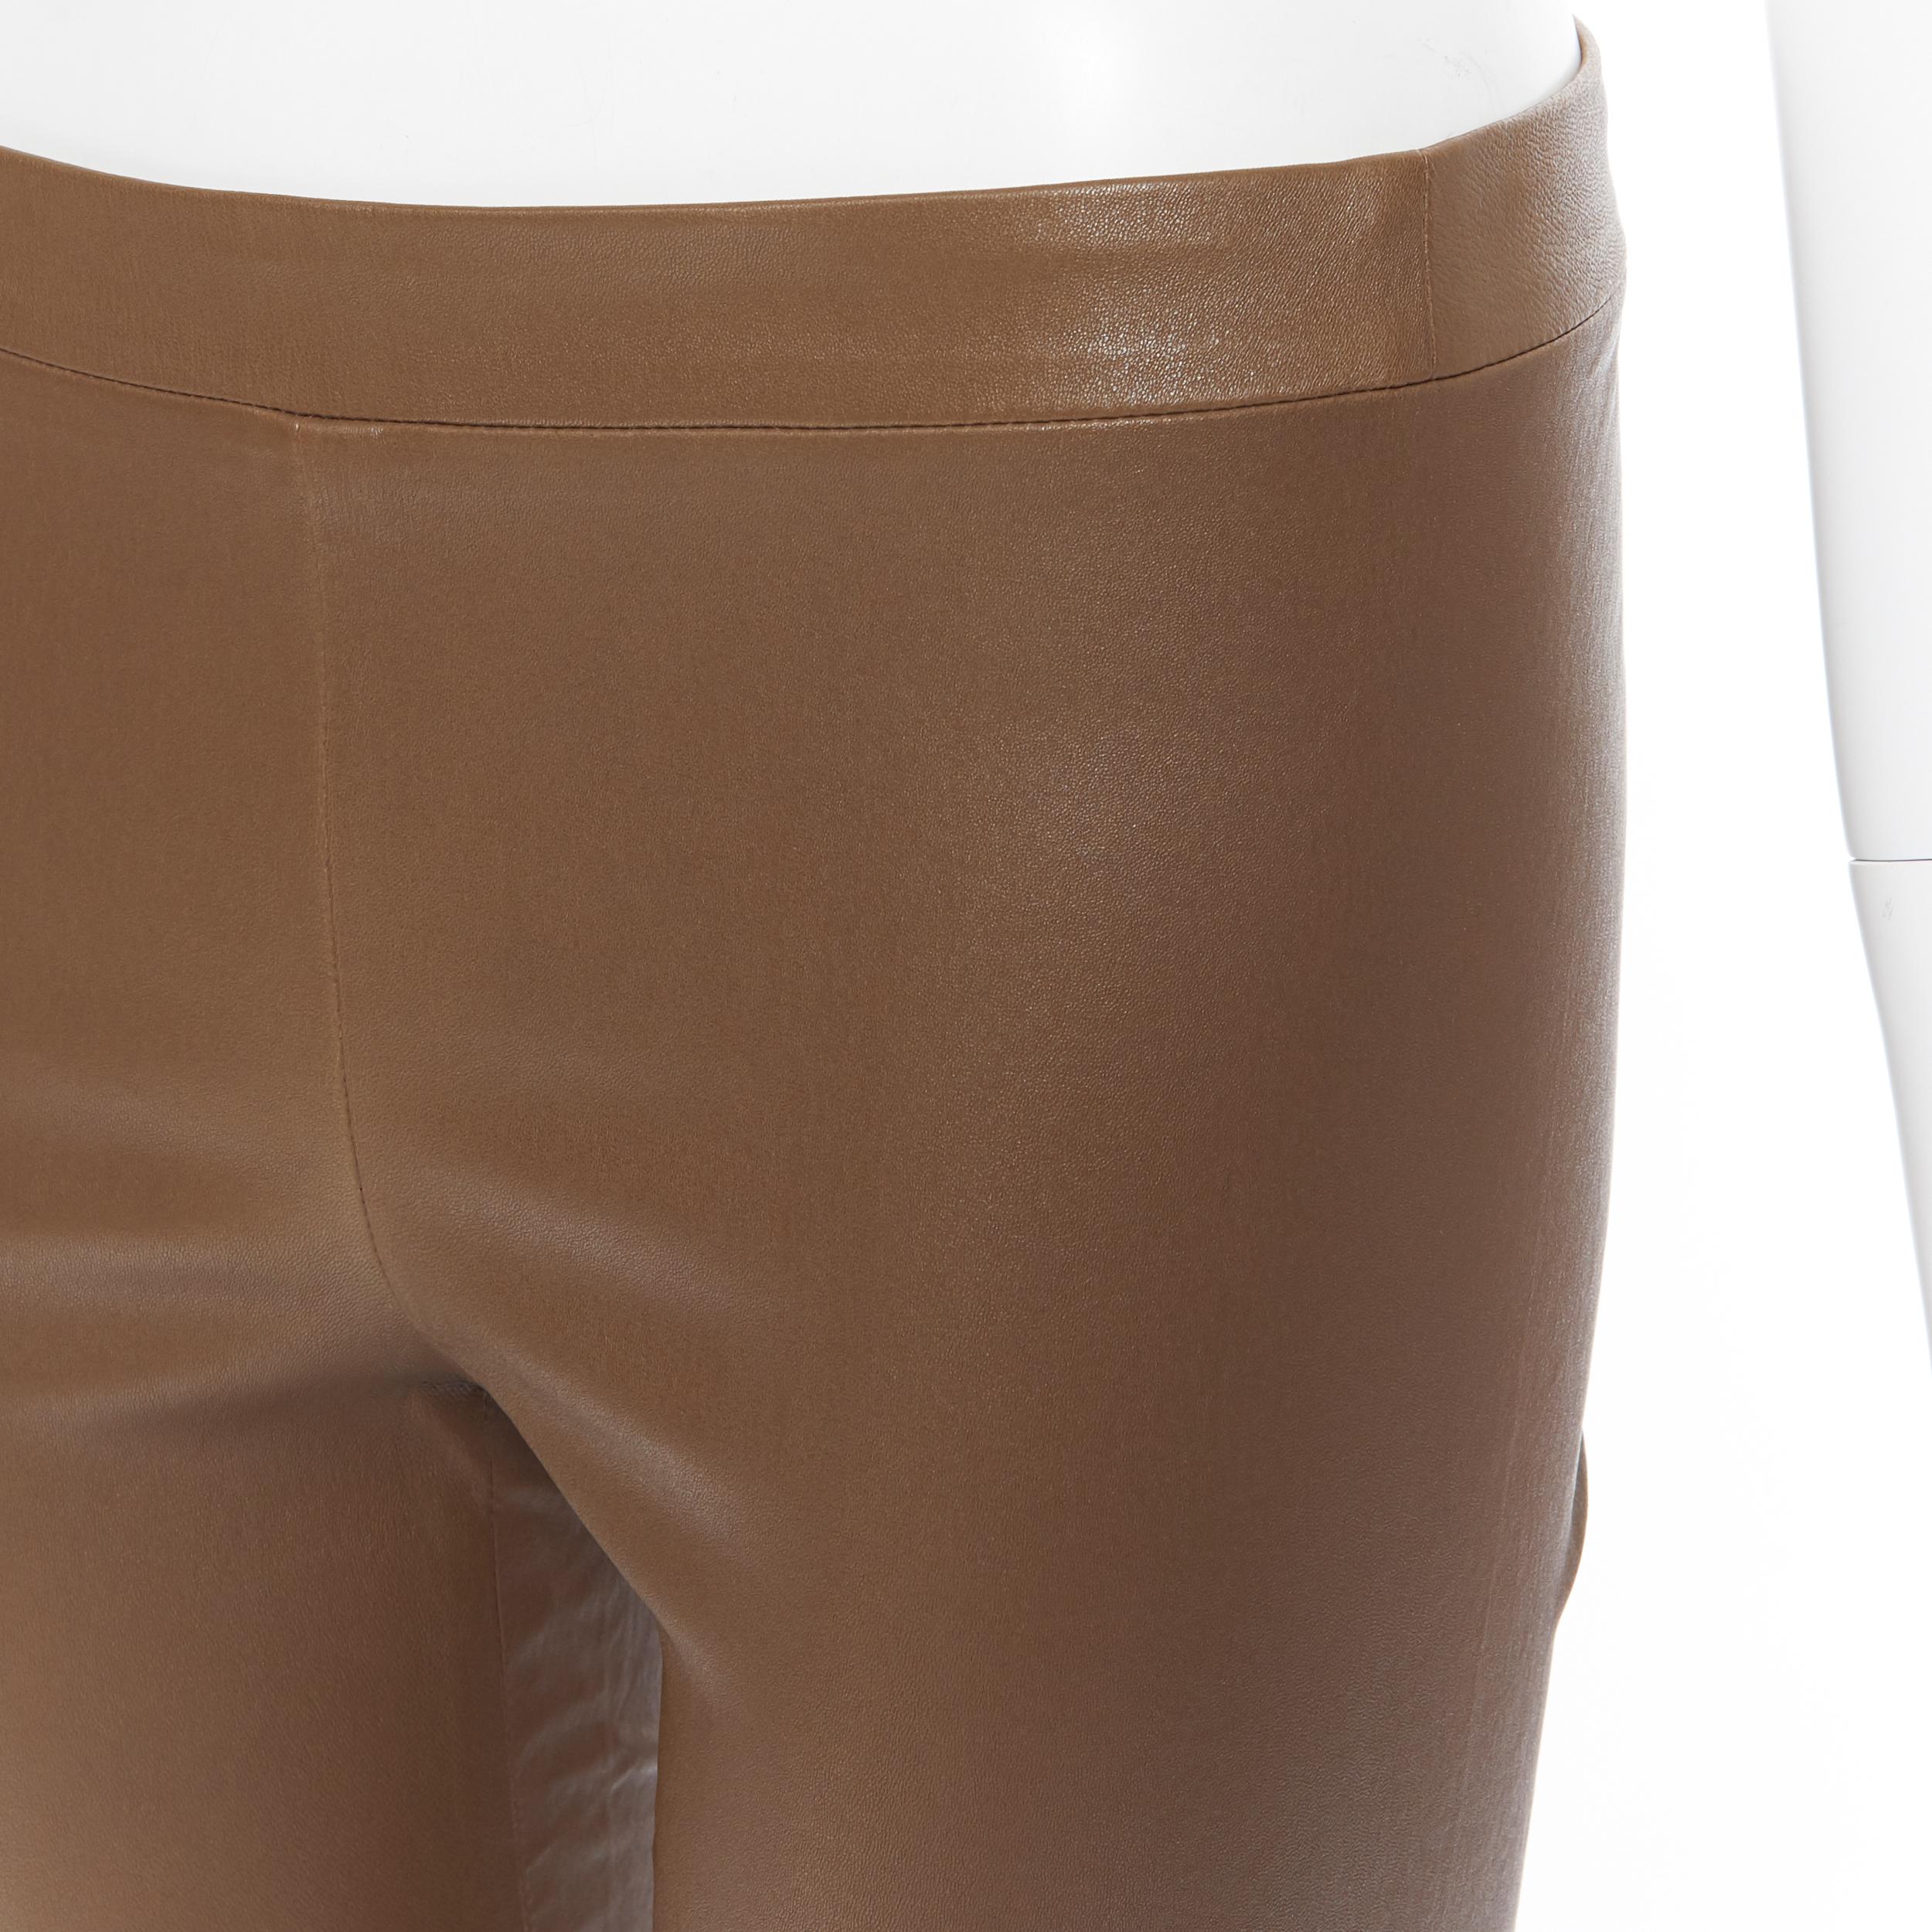 VINCE 100% leather tan brown minimal stretchy skinny leg pants XS 2